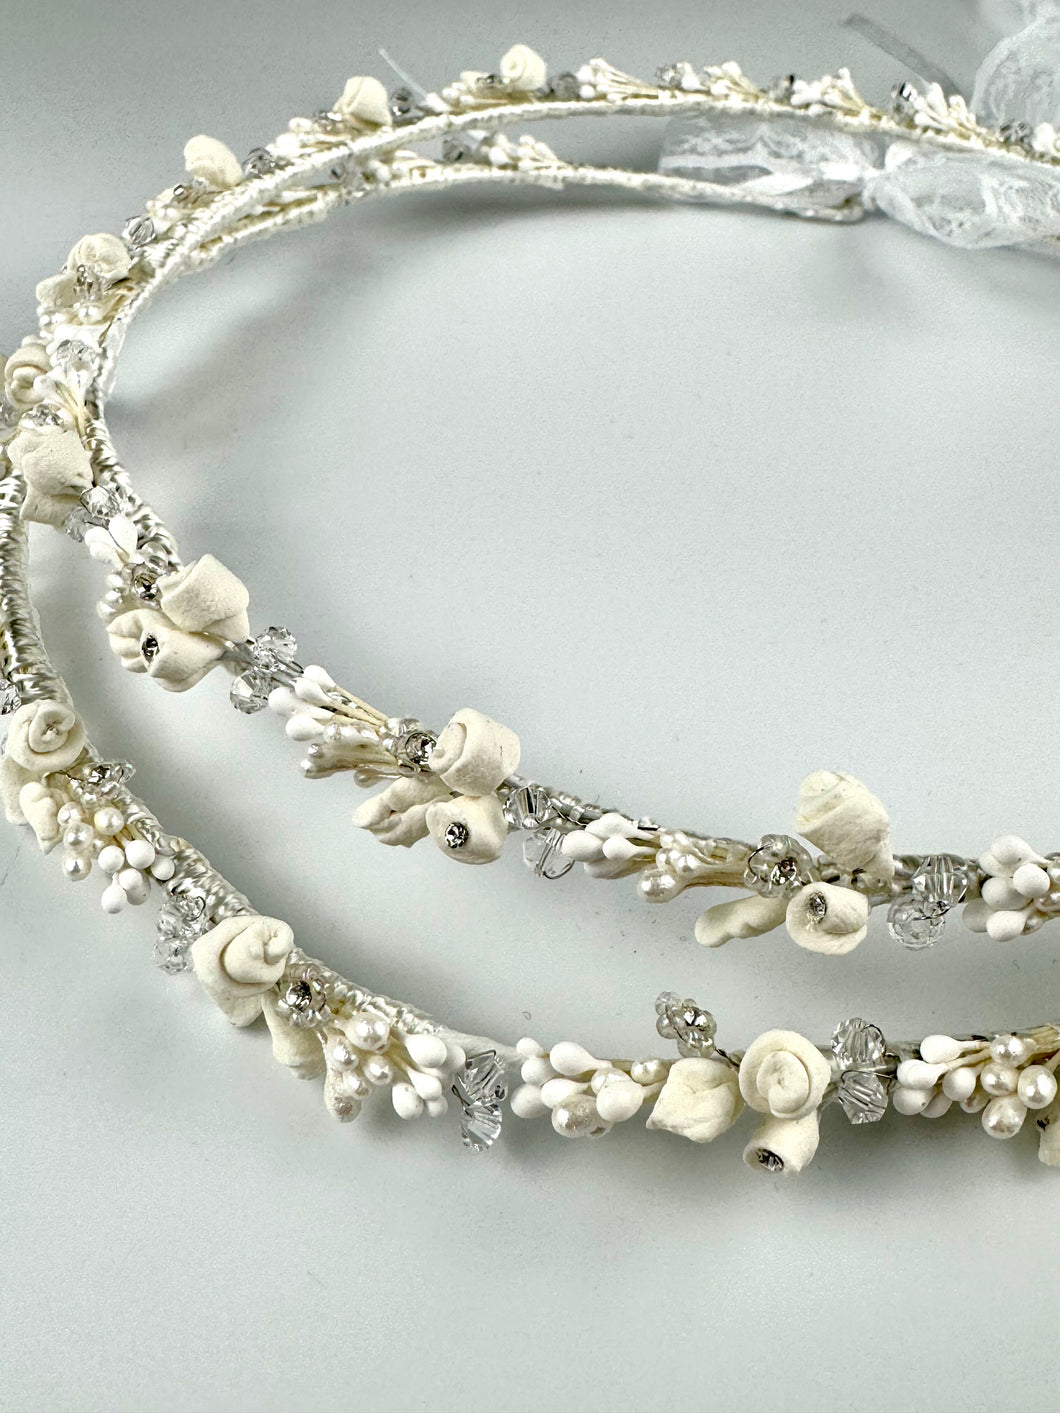 White Rosettes with Swarovski Crystals Wedding Crowns B04